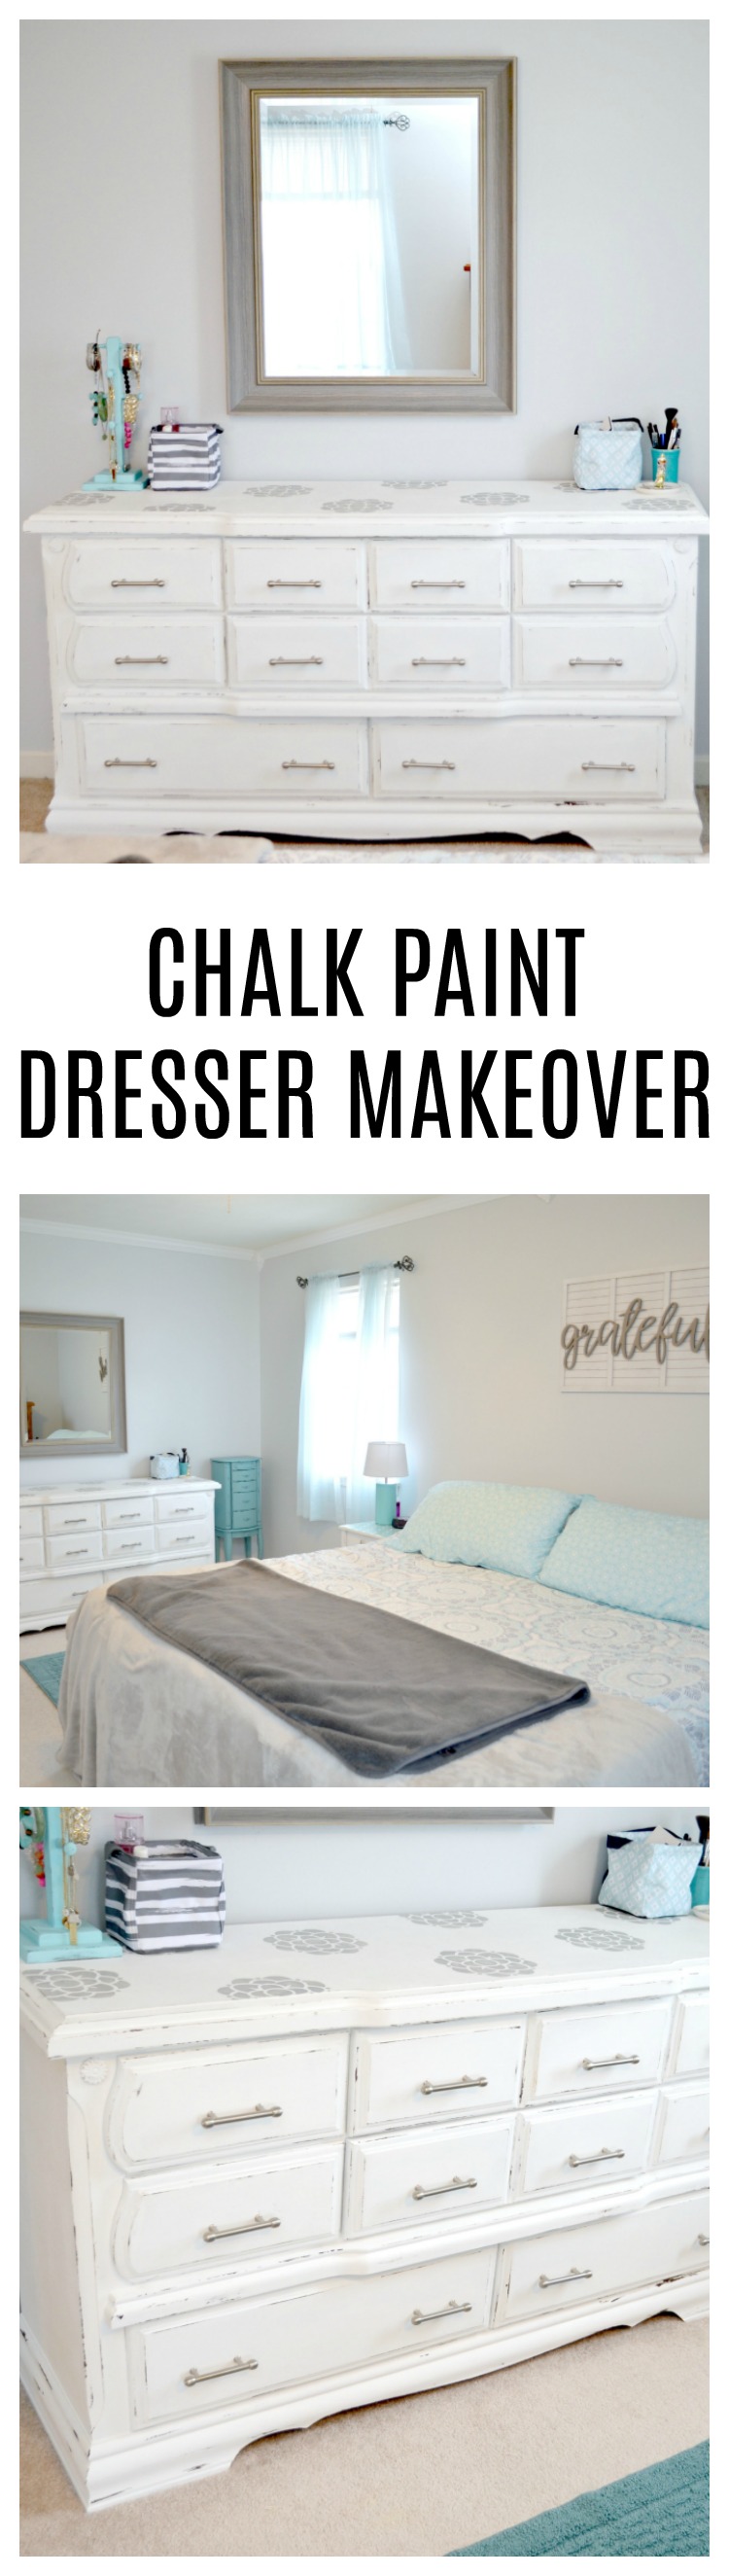 Chalk Paint Dresser Makeover